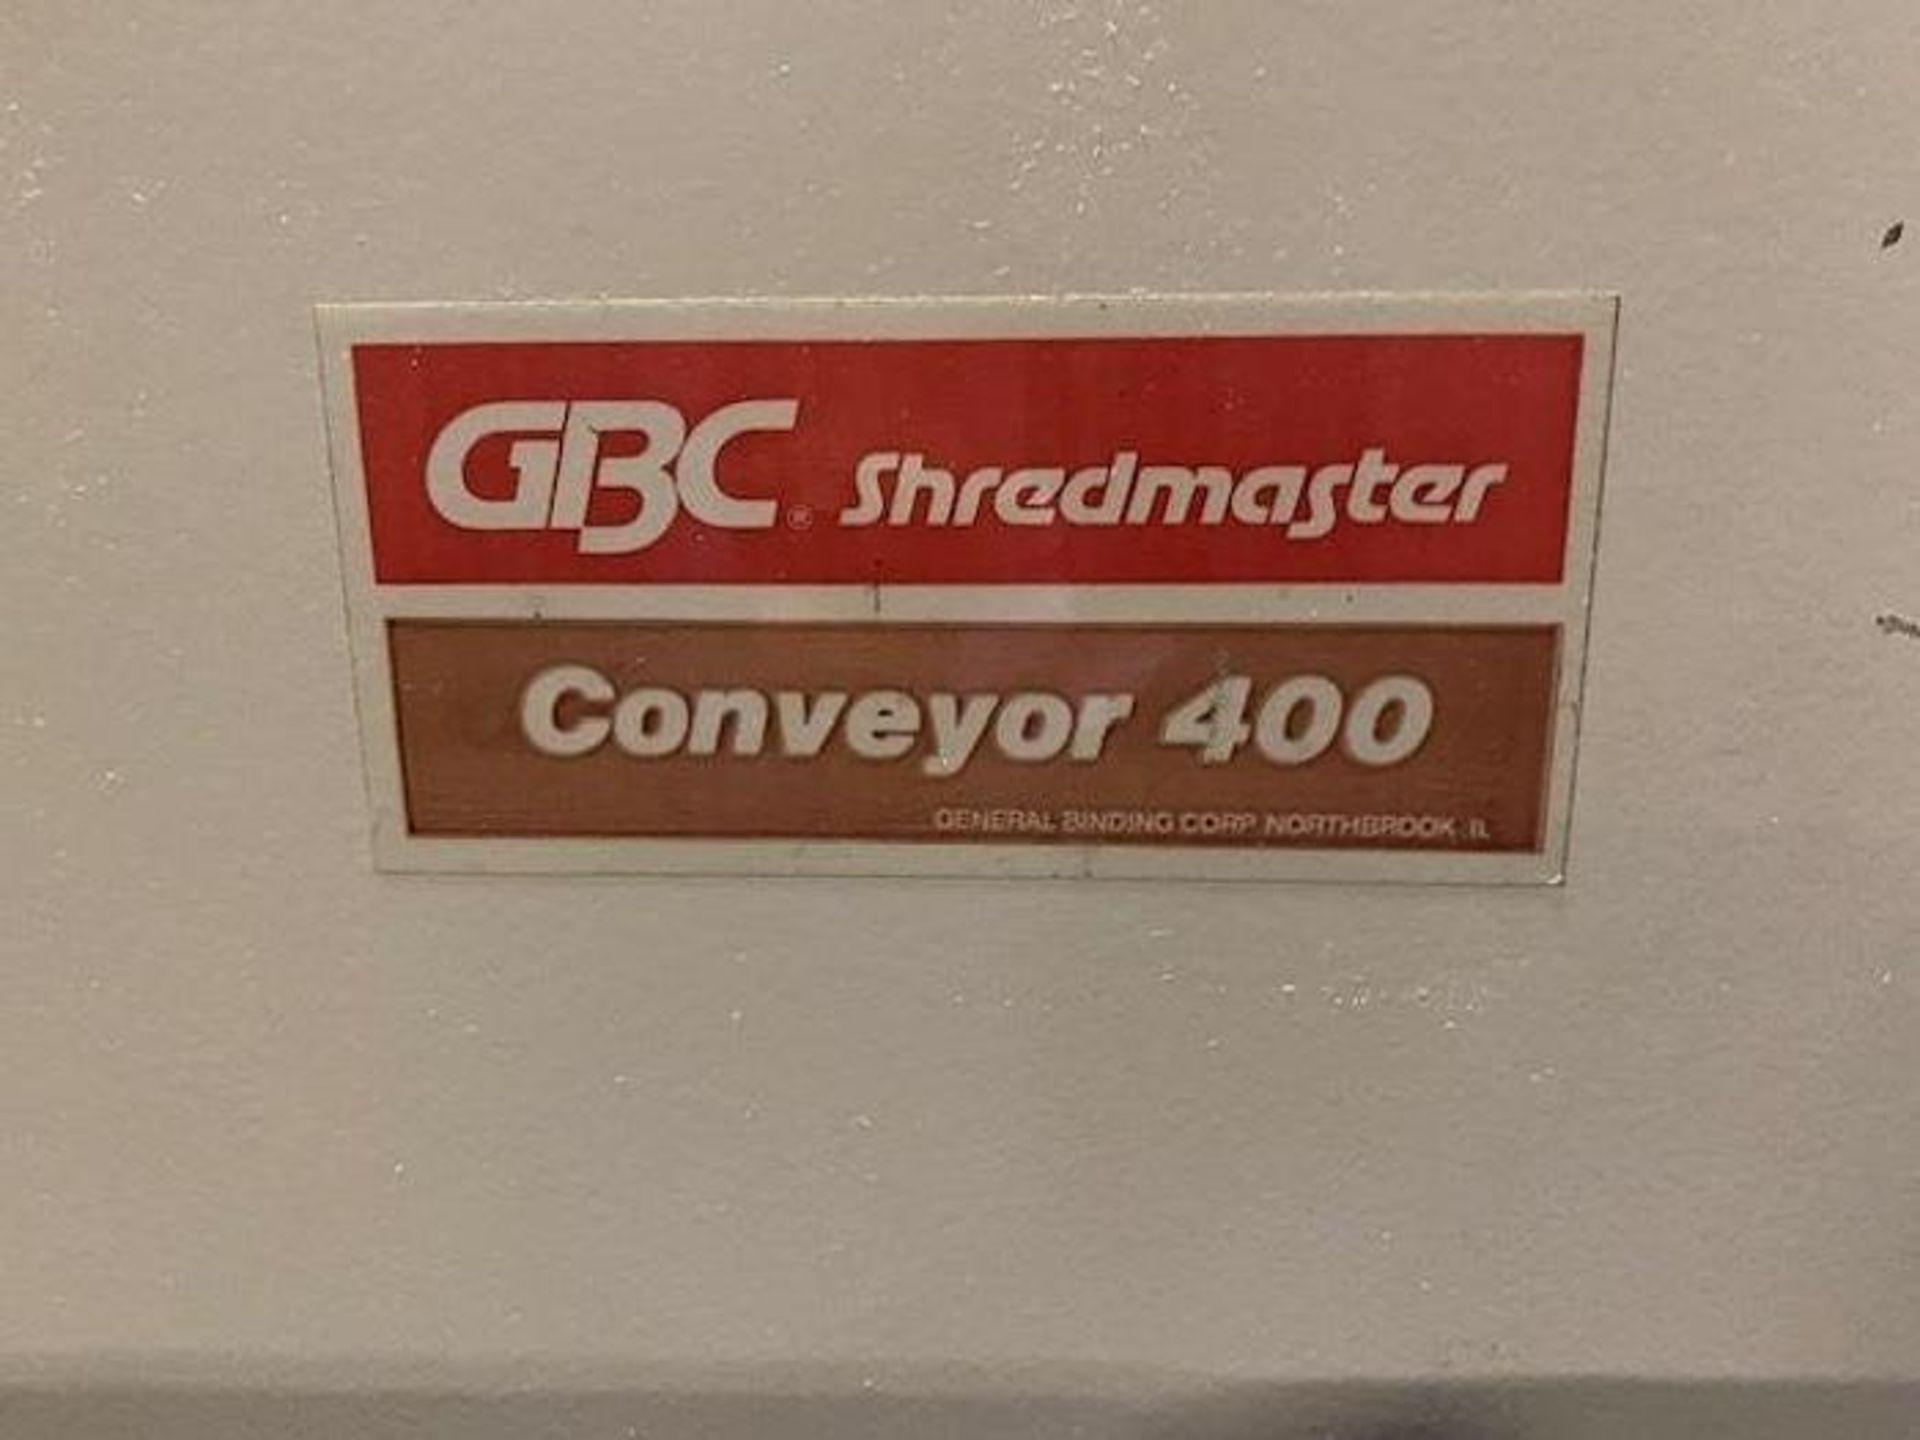 GBC SHREDMASTER /CONVEYOR 400 - Image 5 of 7